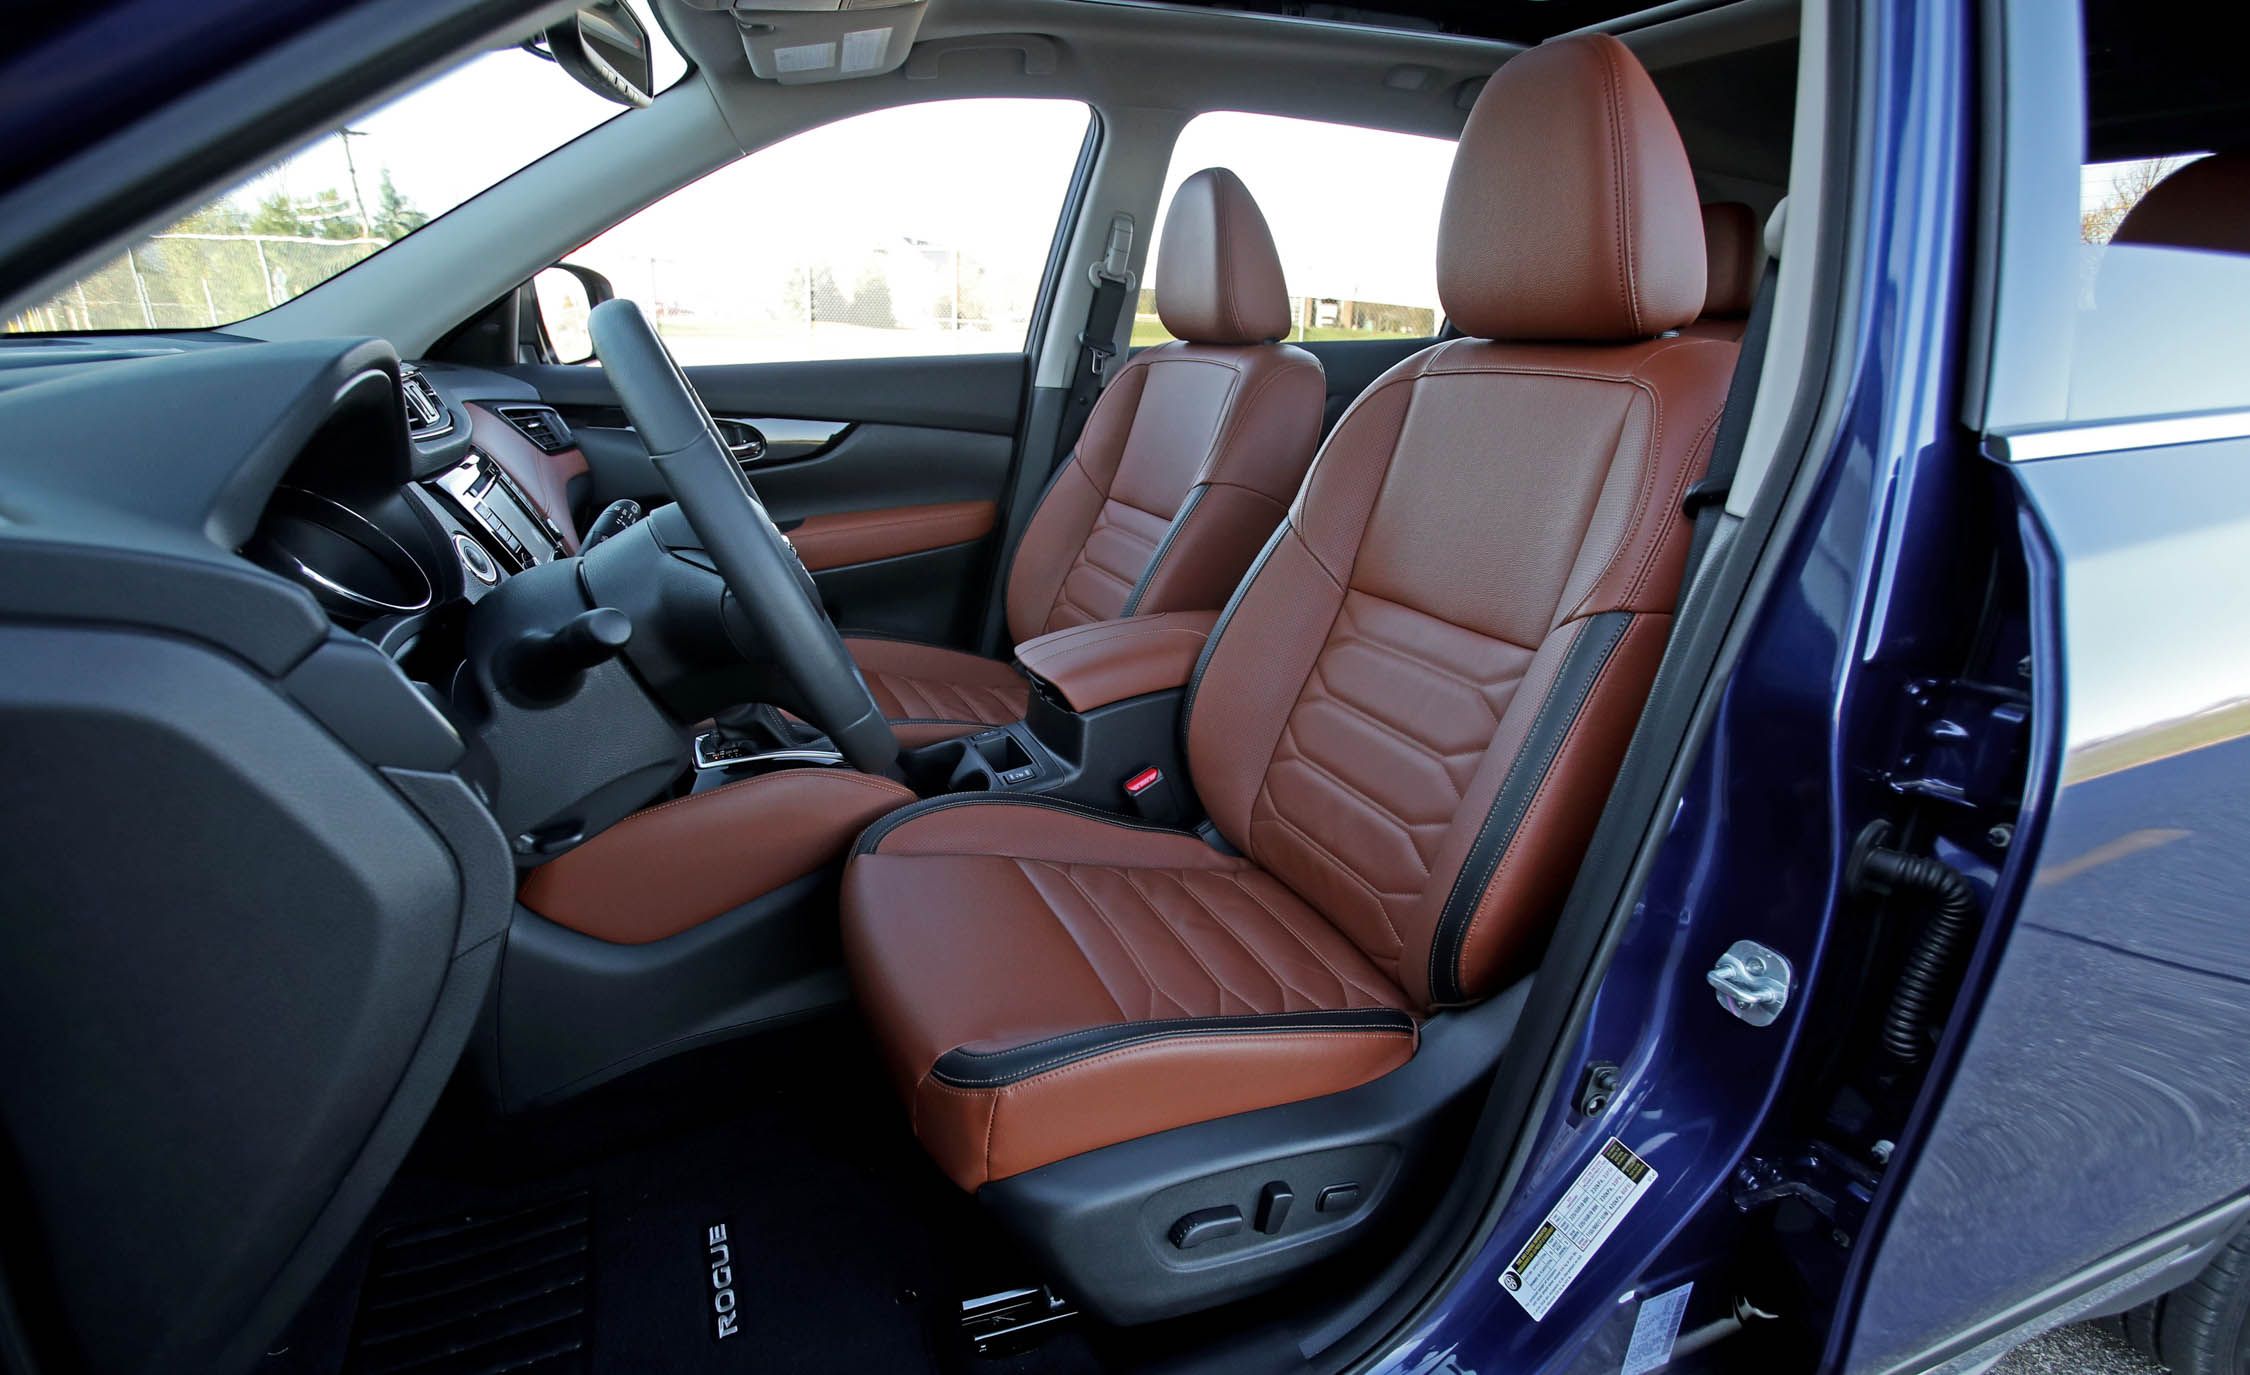 2017 Nissan Rogue Interior Seats Driver Cockpit (View 27 of 37)